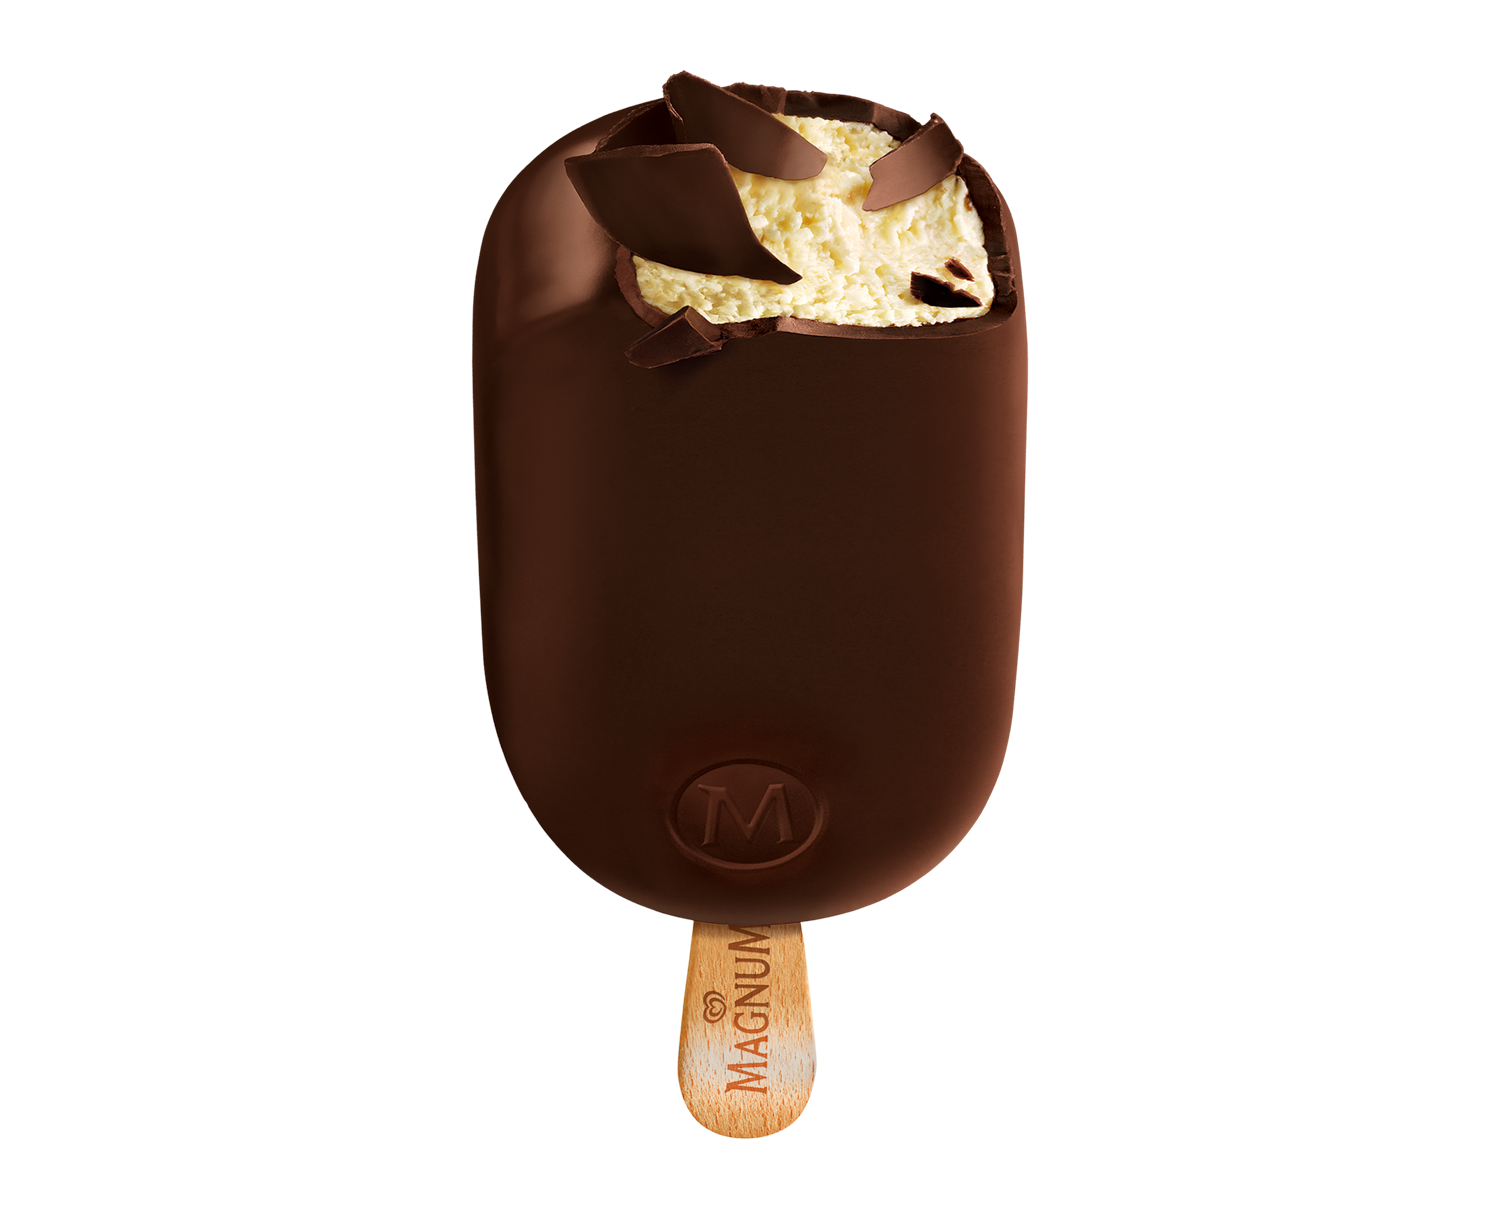 Буква эскимо. Мороженое эскимо Magnum. Мороженое Магнум эскимо. Magnum Chocolate Ice Cream. Мороженое Magnum Algida.